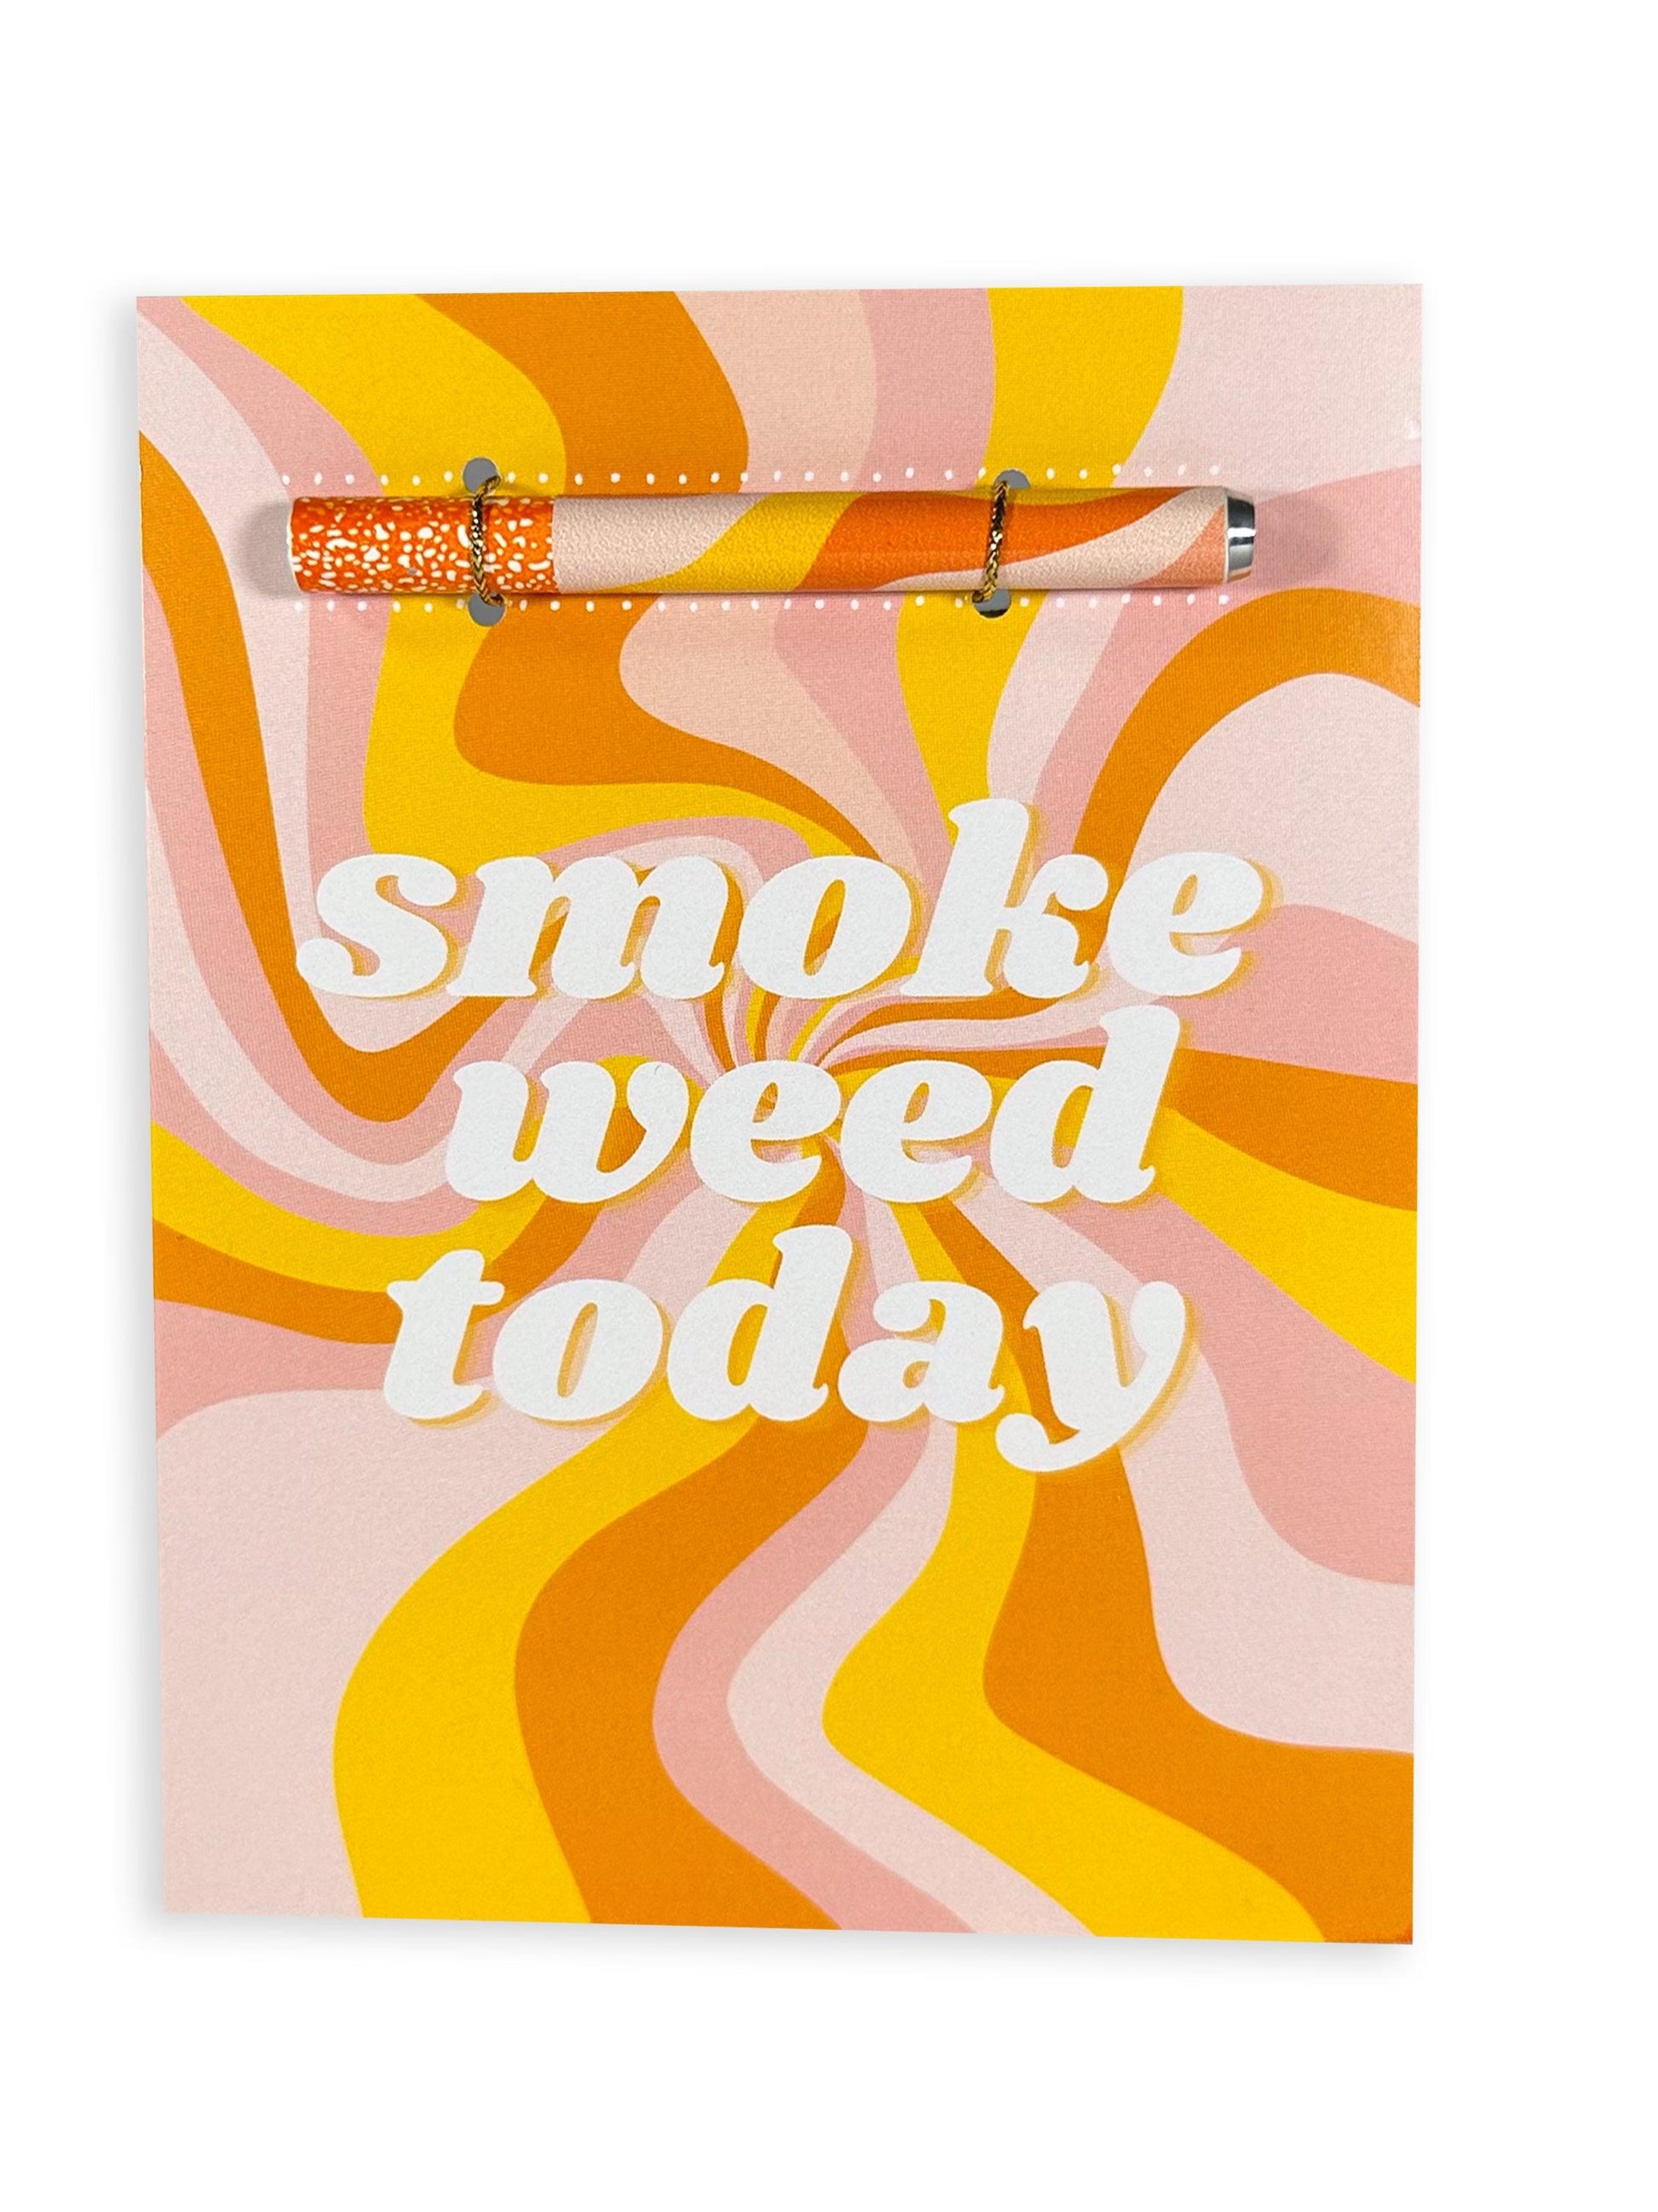 Smoke Weed Today Greeting Card - KushKards